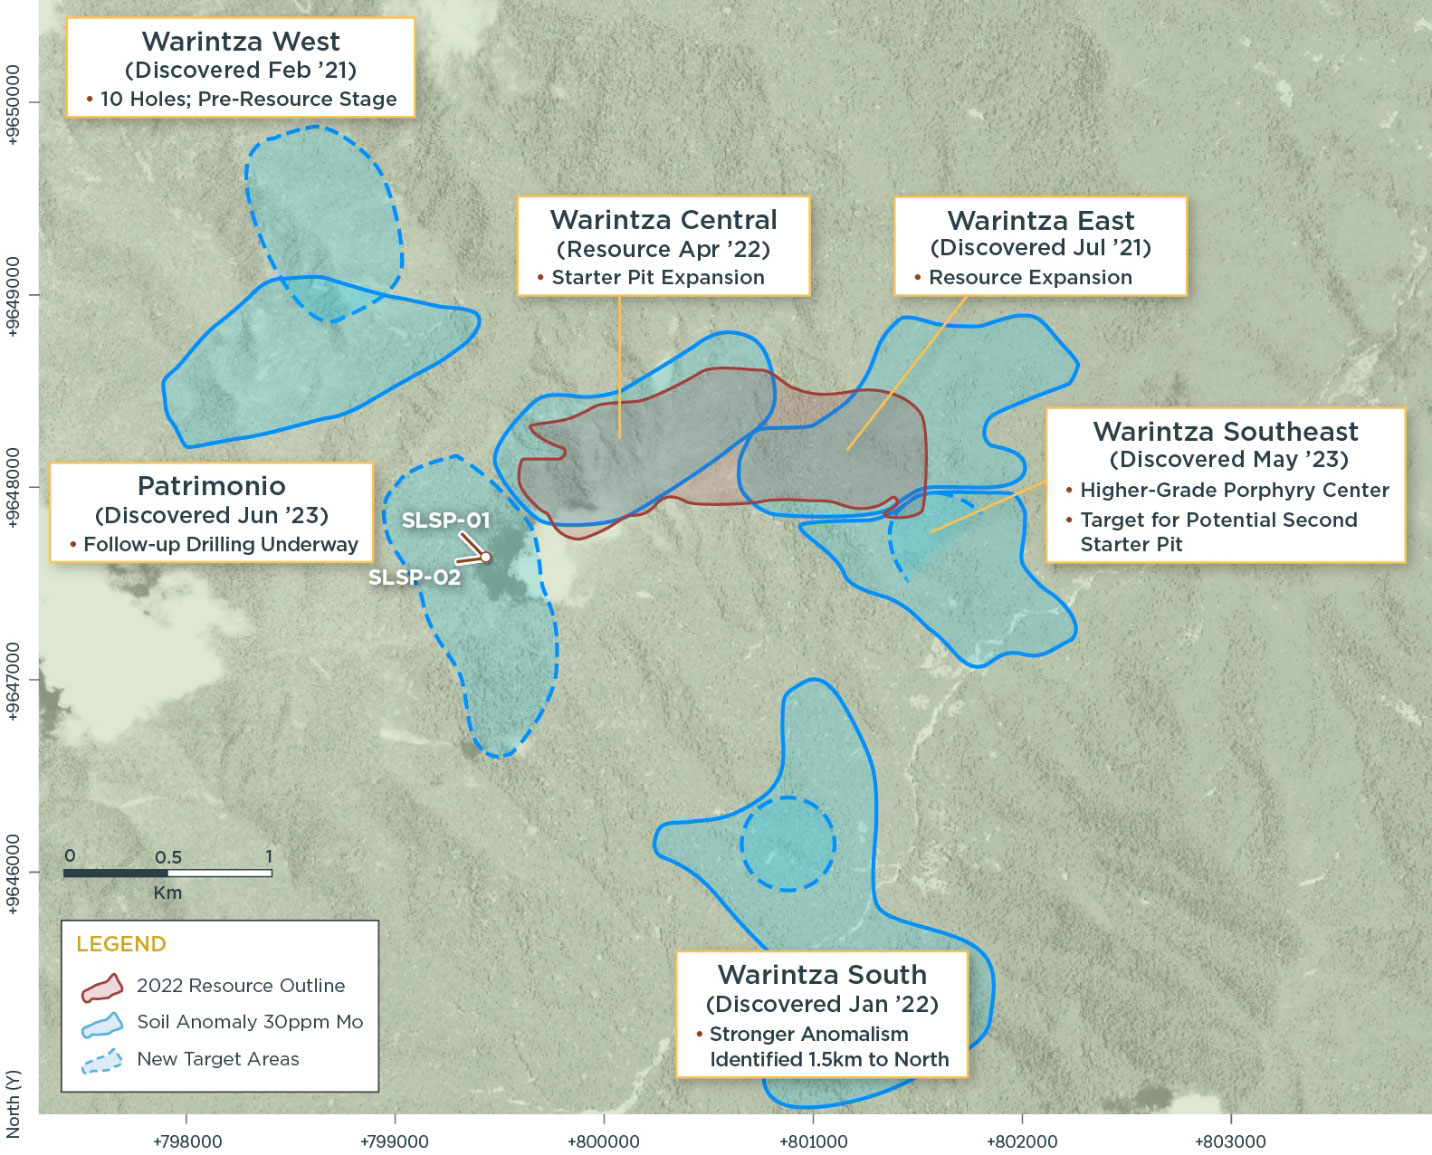 Plan View of Warintza Porphyry Cluster and Patrimonio Drilling